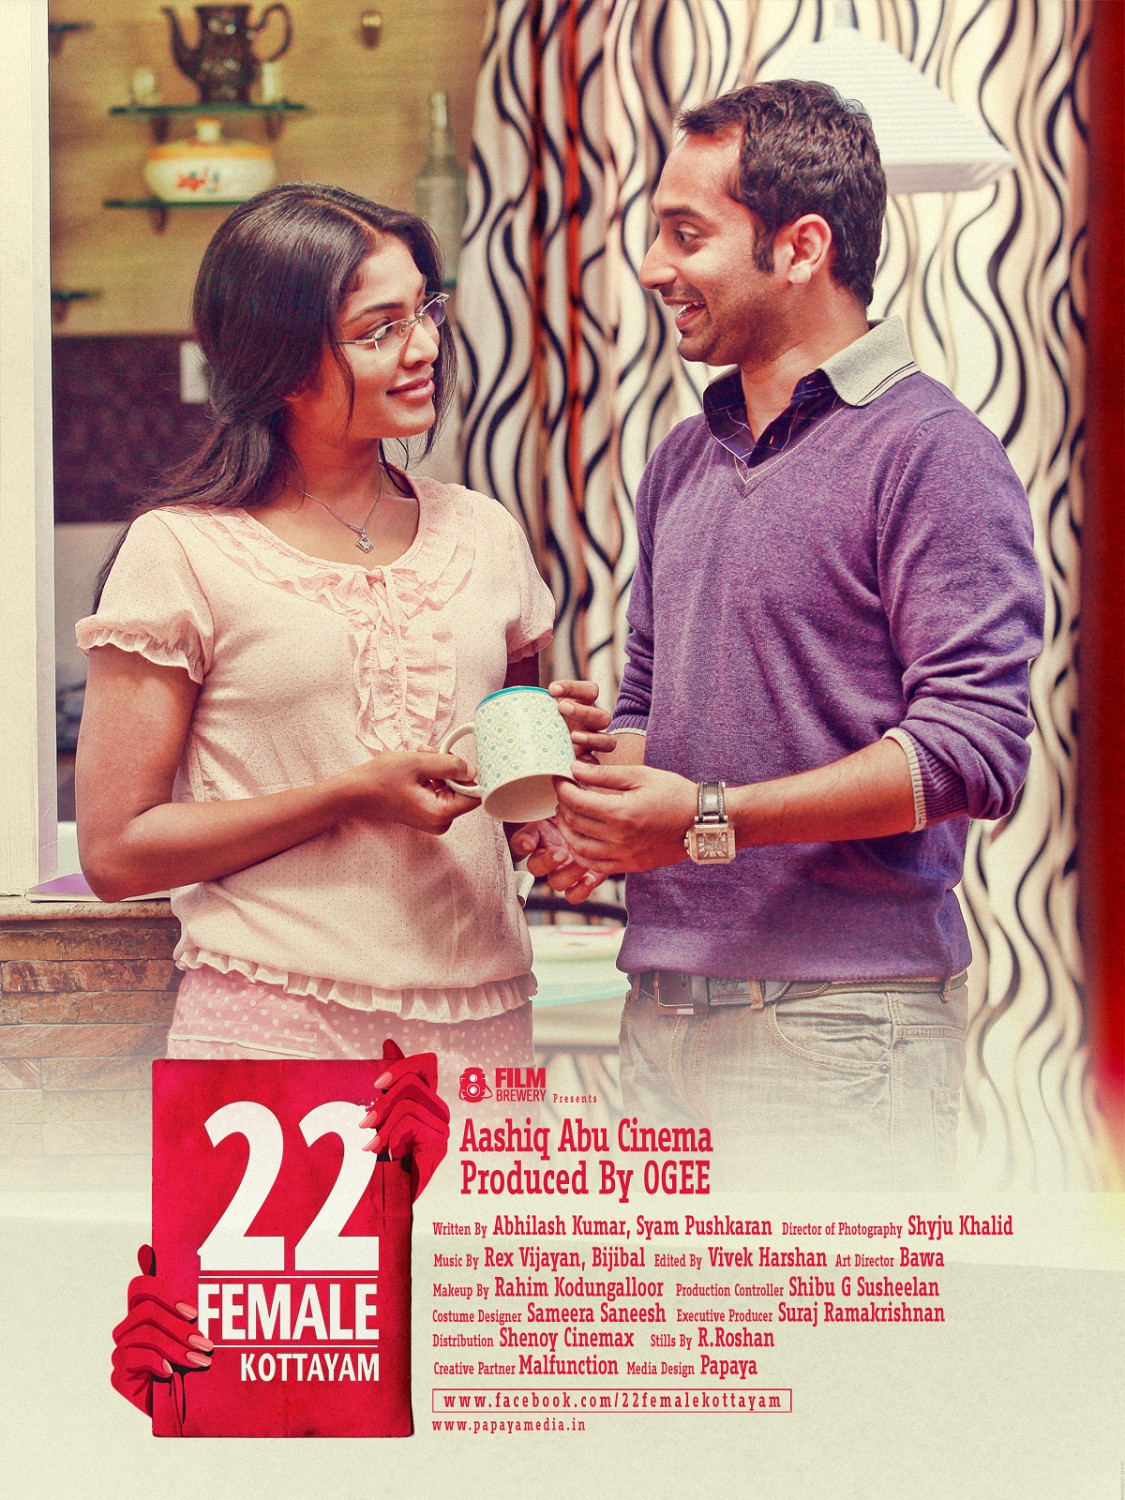 Extra Large Movie Poster Image for 22 Female Kottayam (#5 of 28)